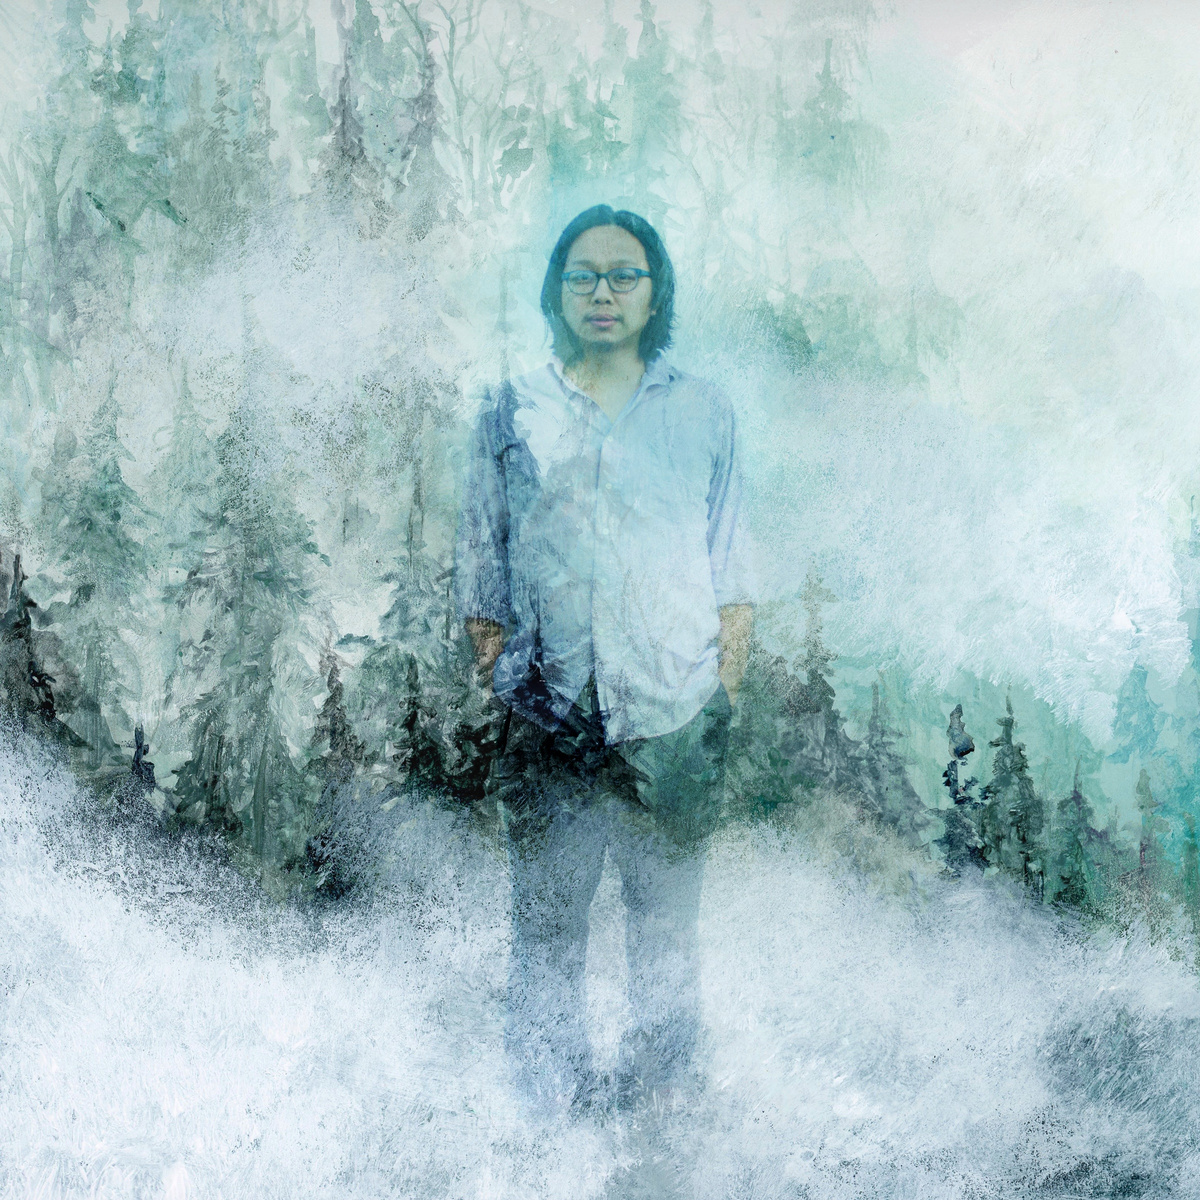 Seattle singer/songwriter Tomo Nakayama's "Darkest of Seasons" from last year's Fog on